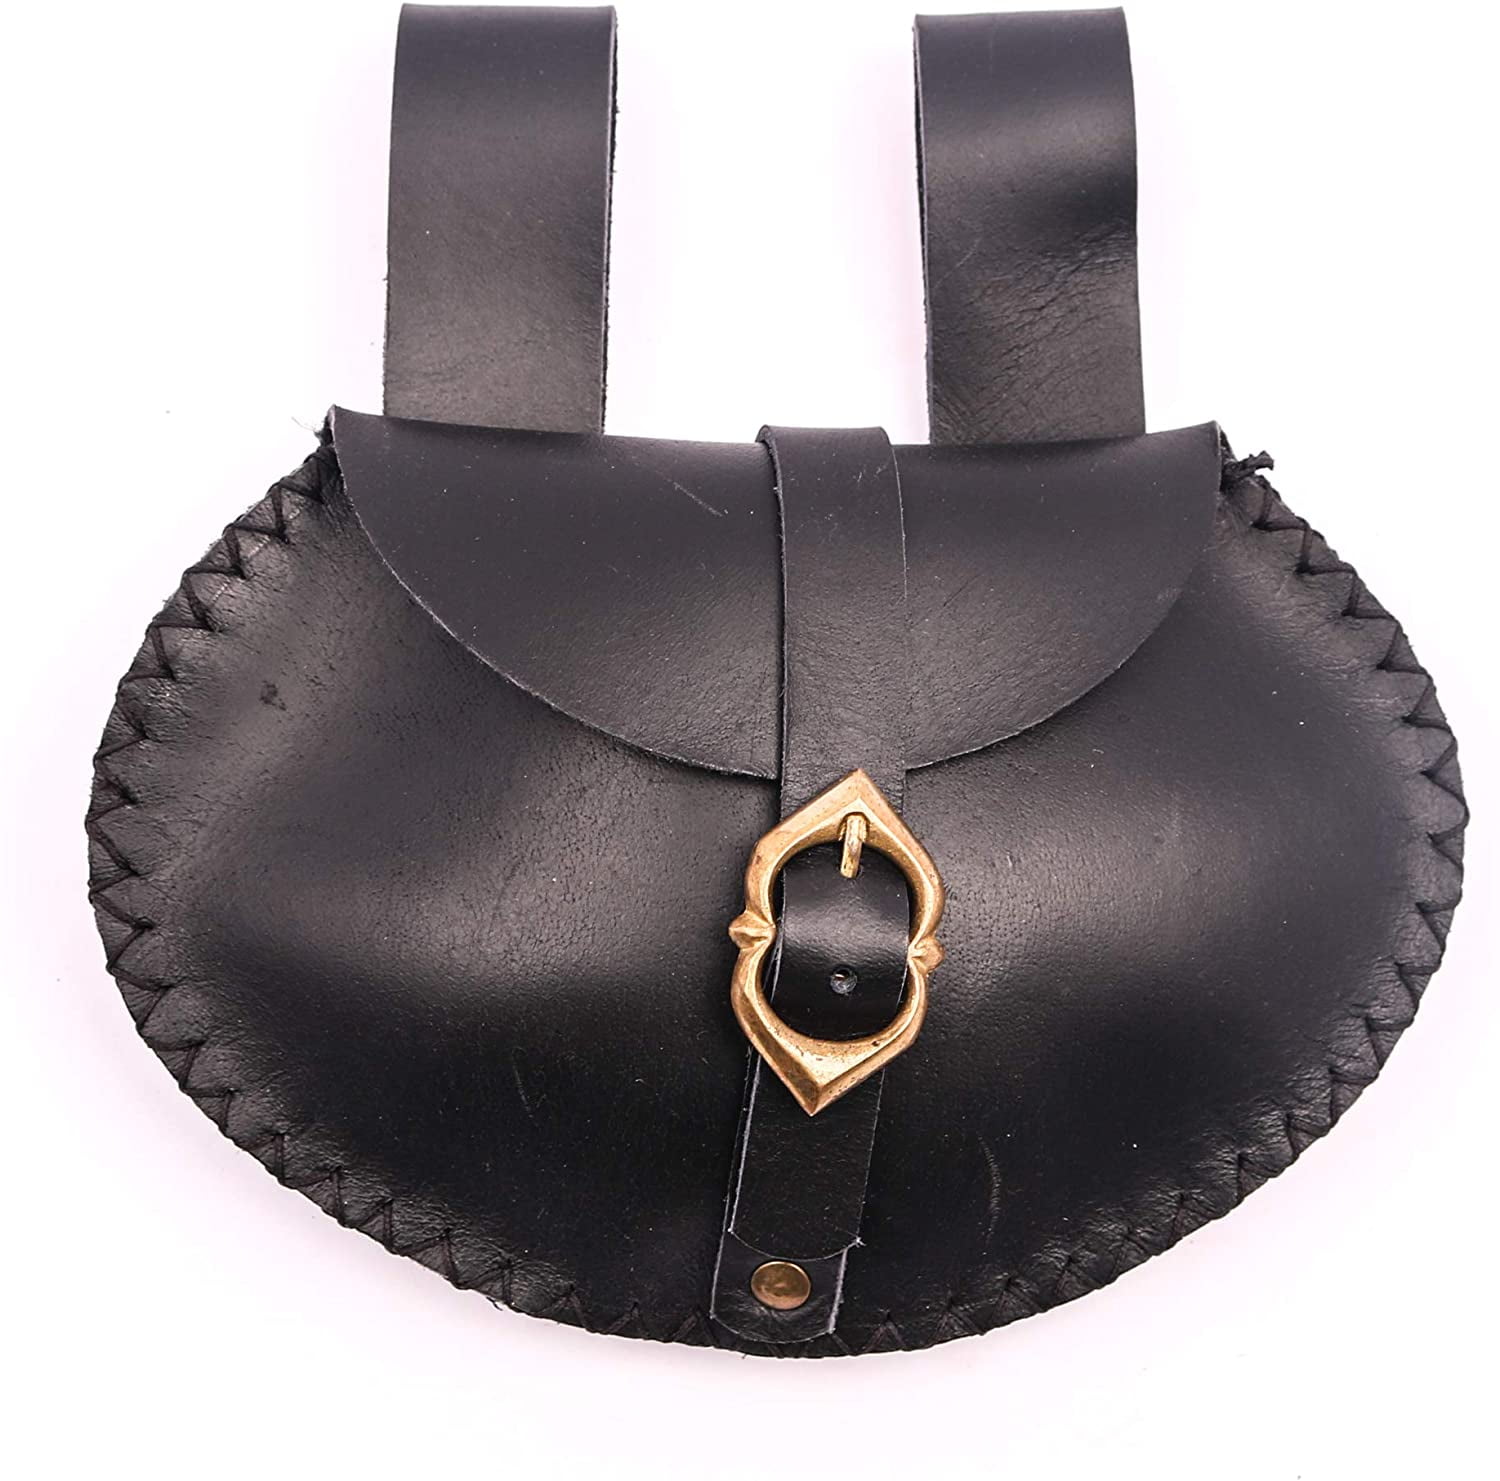 Medieval leather pouch viking SCA LARP Reenactment gear kit belt bag darkbrown 